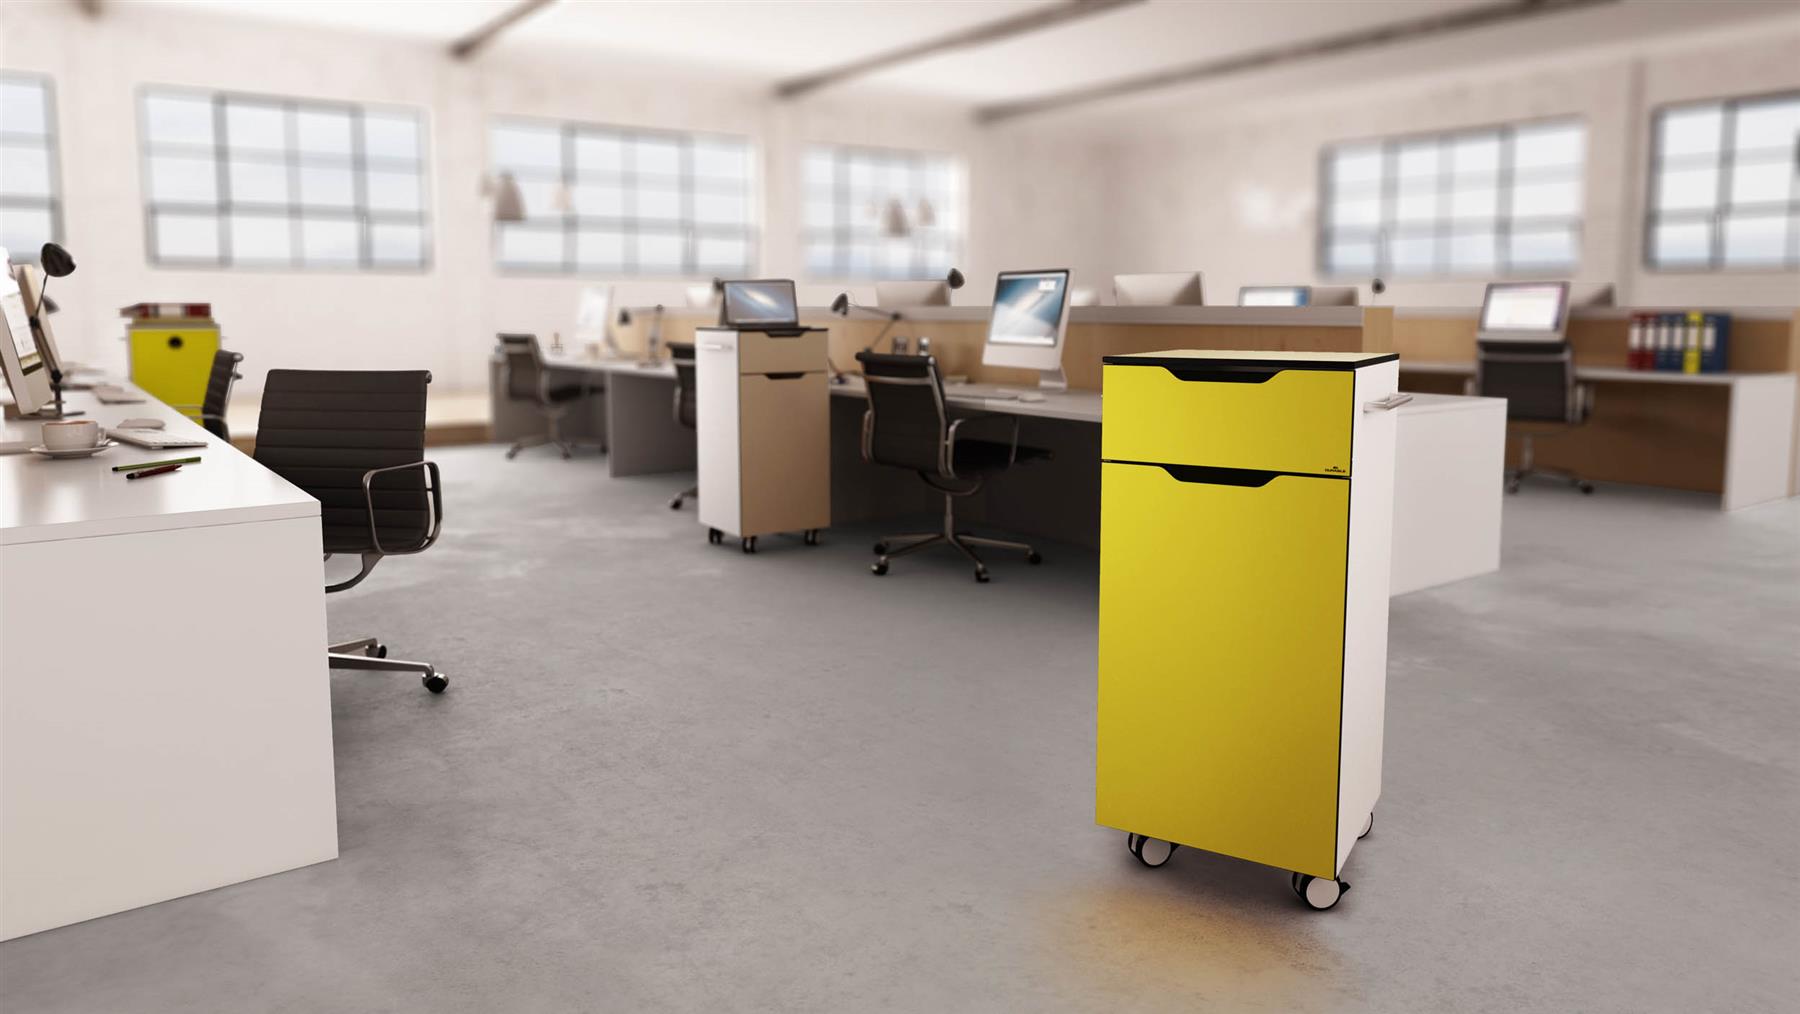 Durable QUARO® ADVANCED | Multi-Function Office Trolley | Yellow